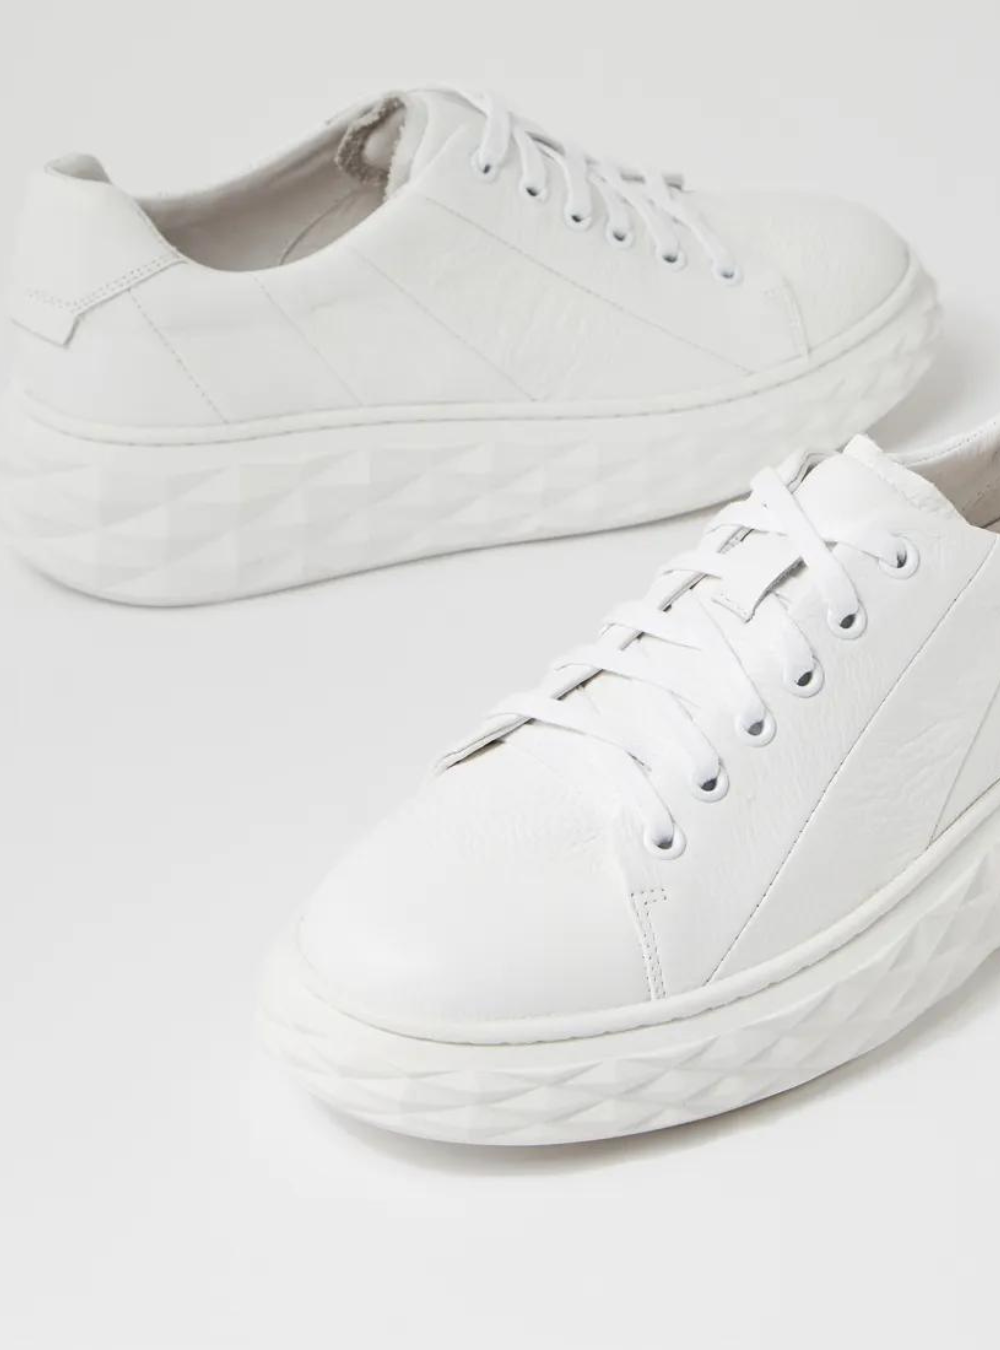 Irisa - White Leather Sneakers